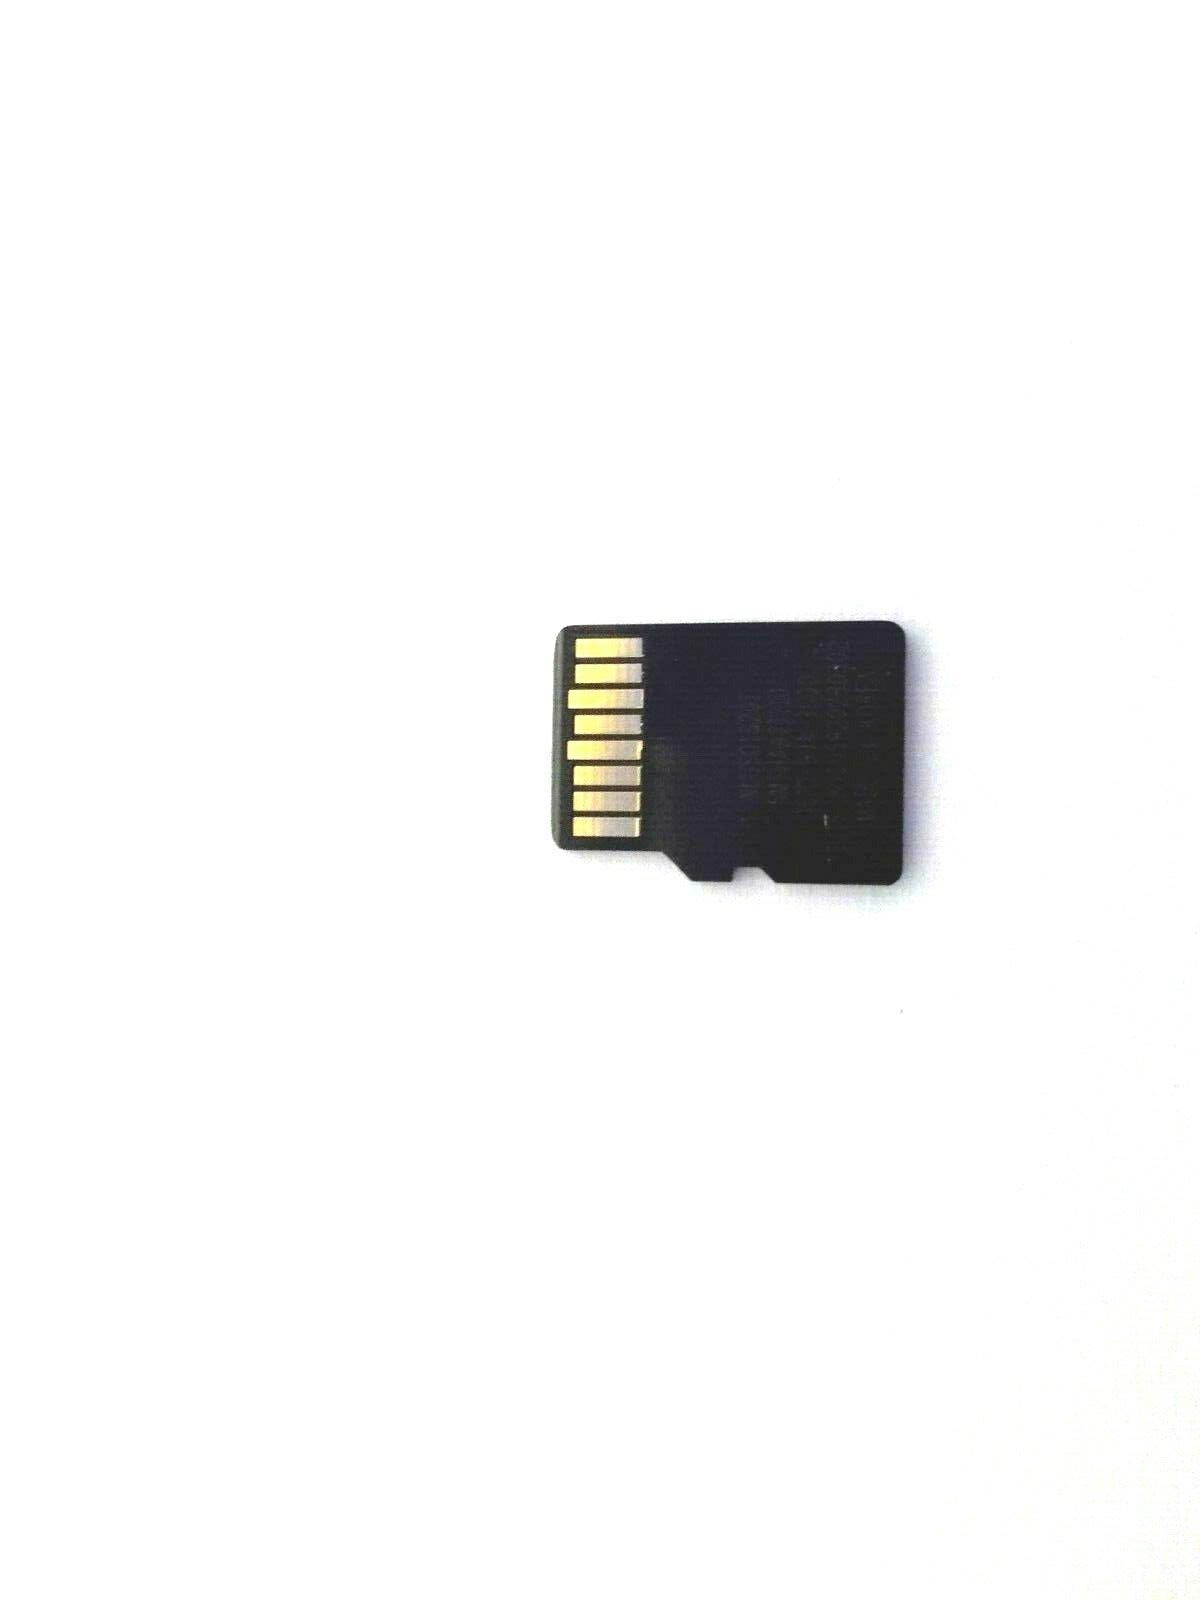 New Genuine  Dell NETLIST NLUS01G20I 1GB Memory MICROSD Card P/N 3DTFD